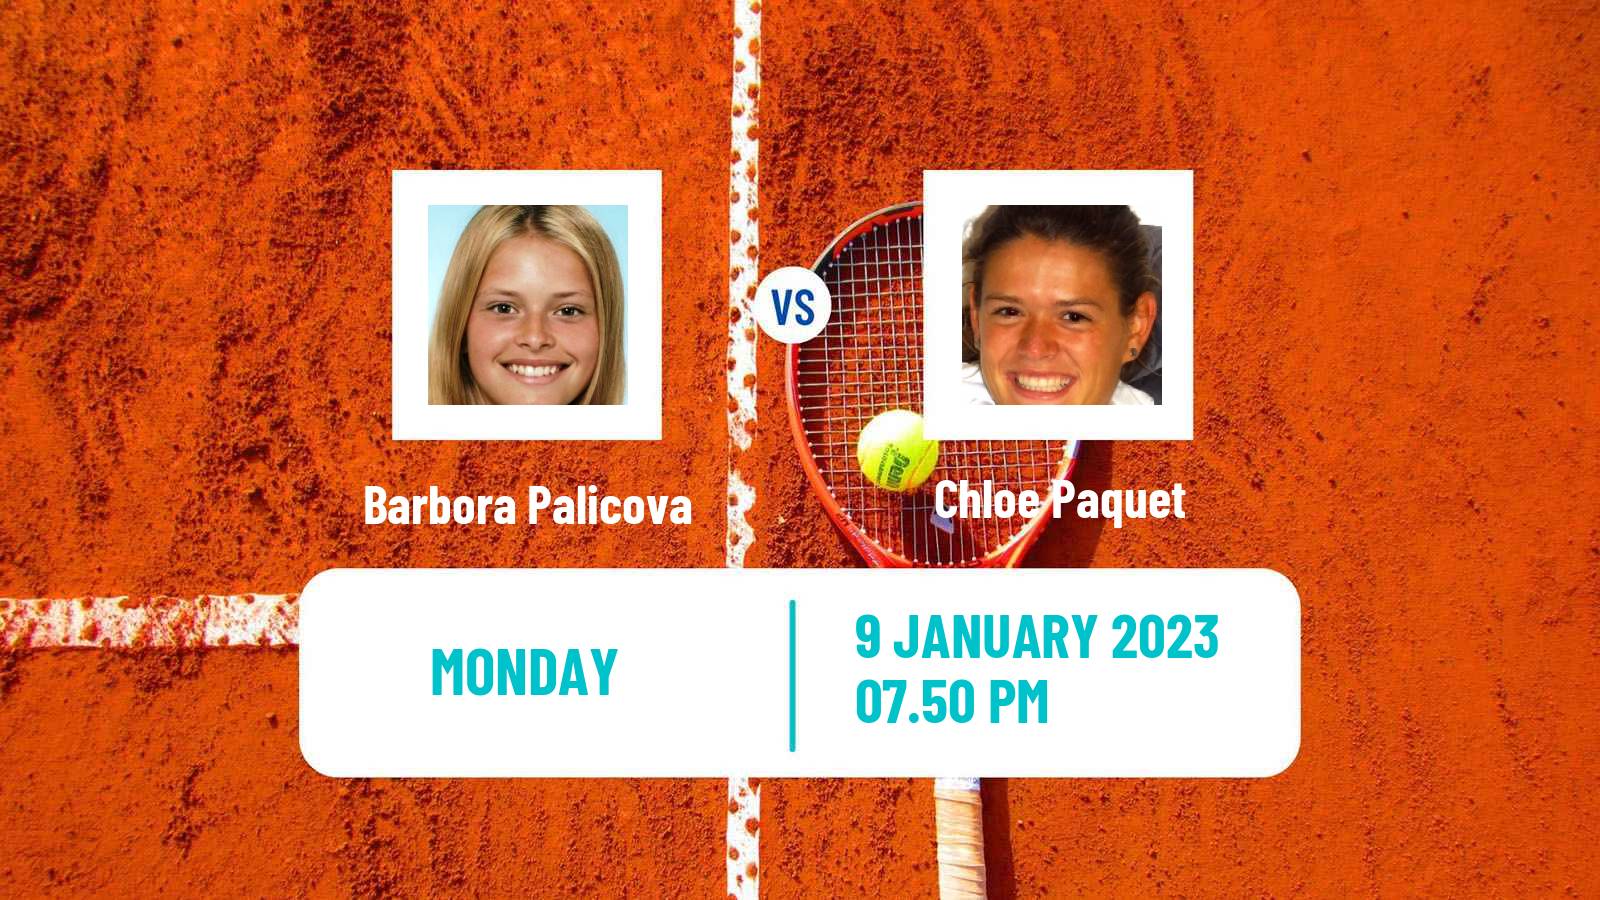 Tennis WTA Australian Open Barbora Palicova - Chloe Paquet